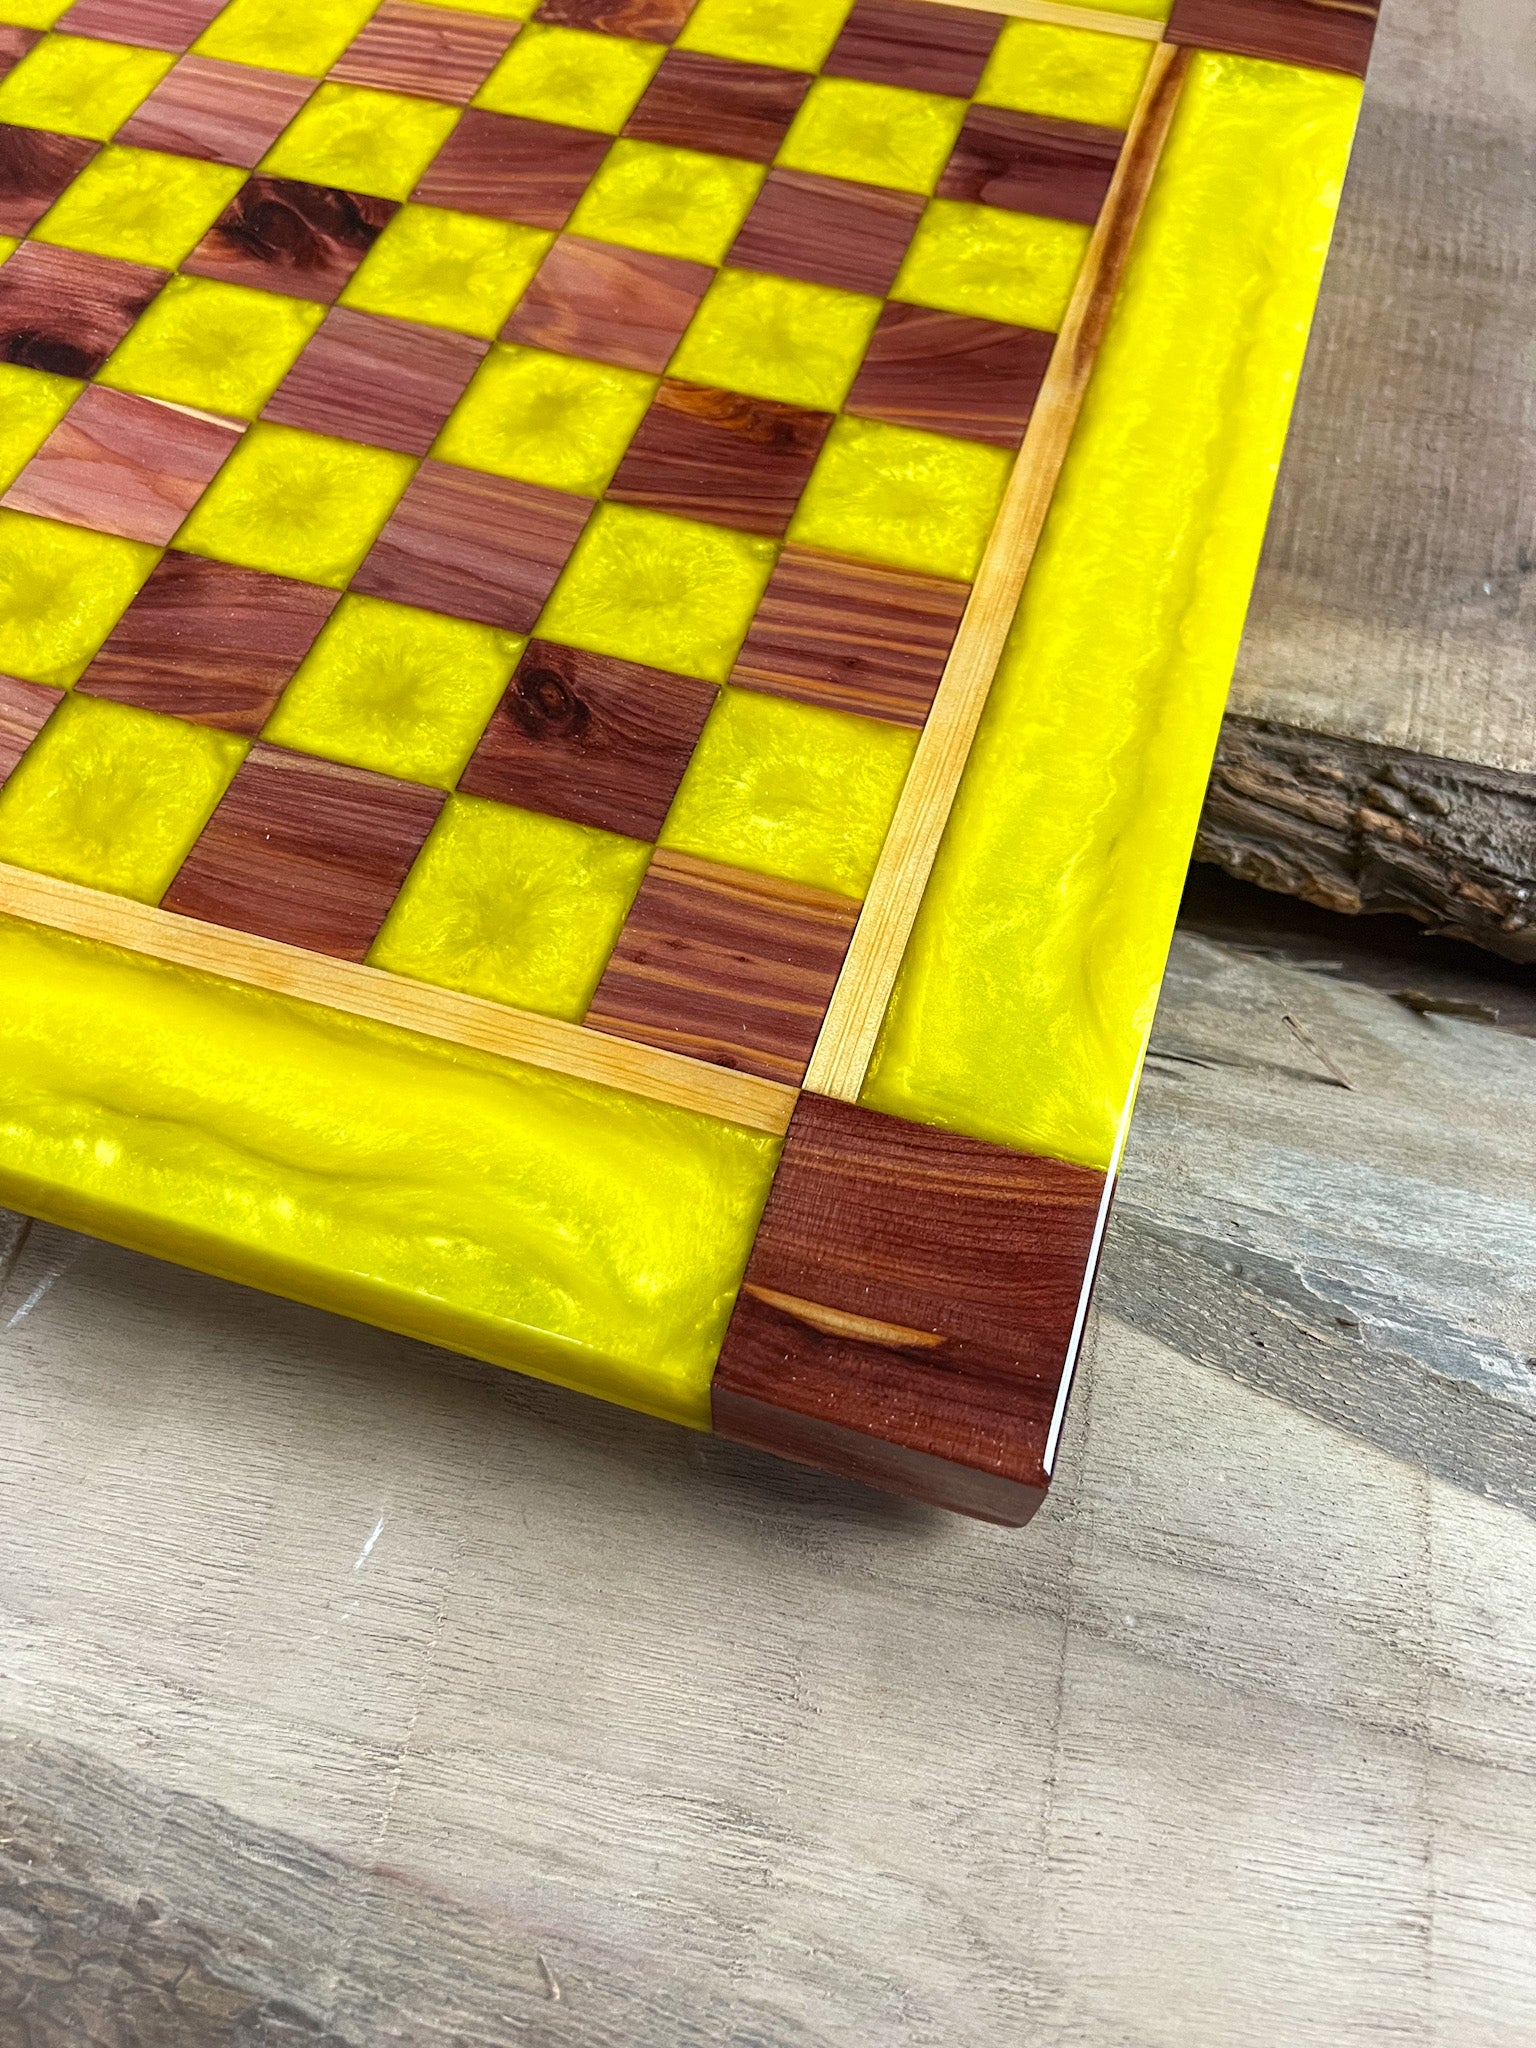 Vivid Yellow Cedar Chess Board (With Border)